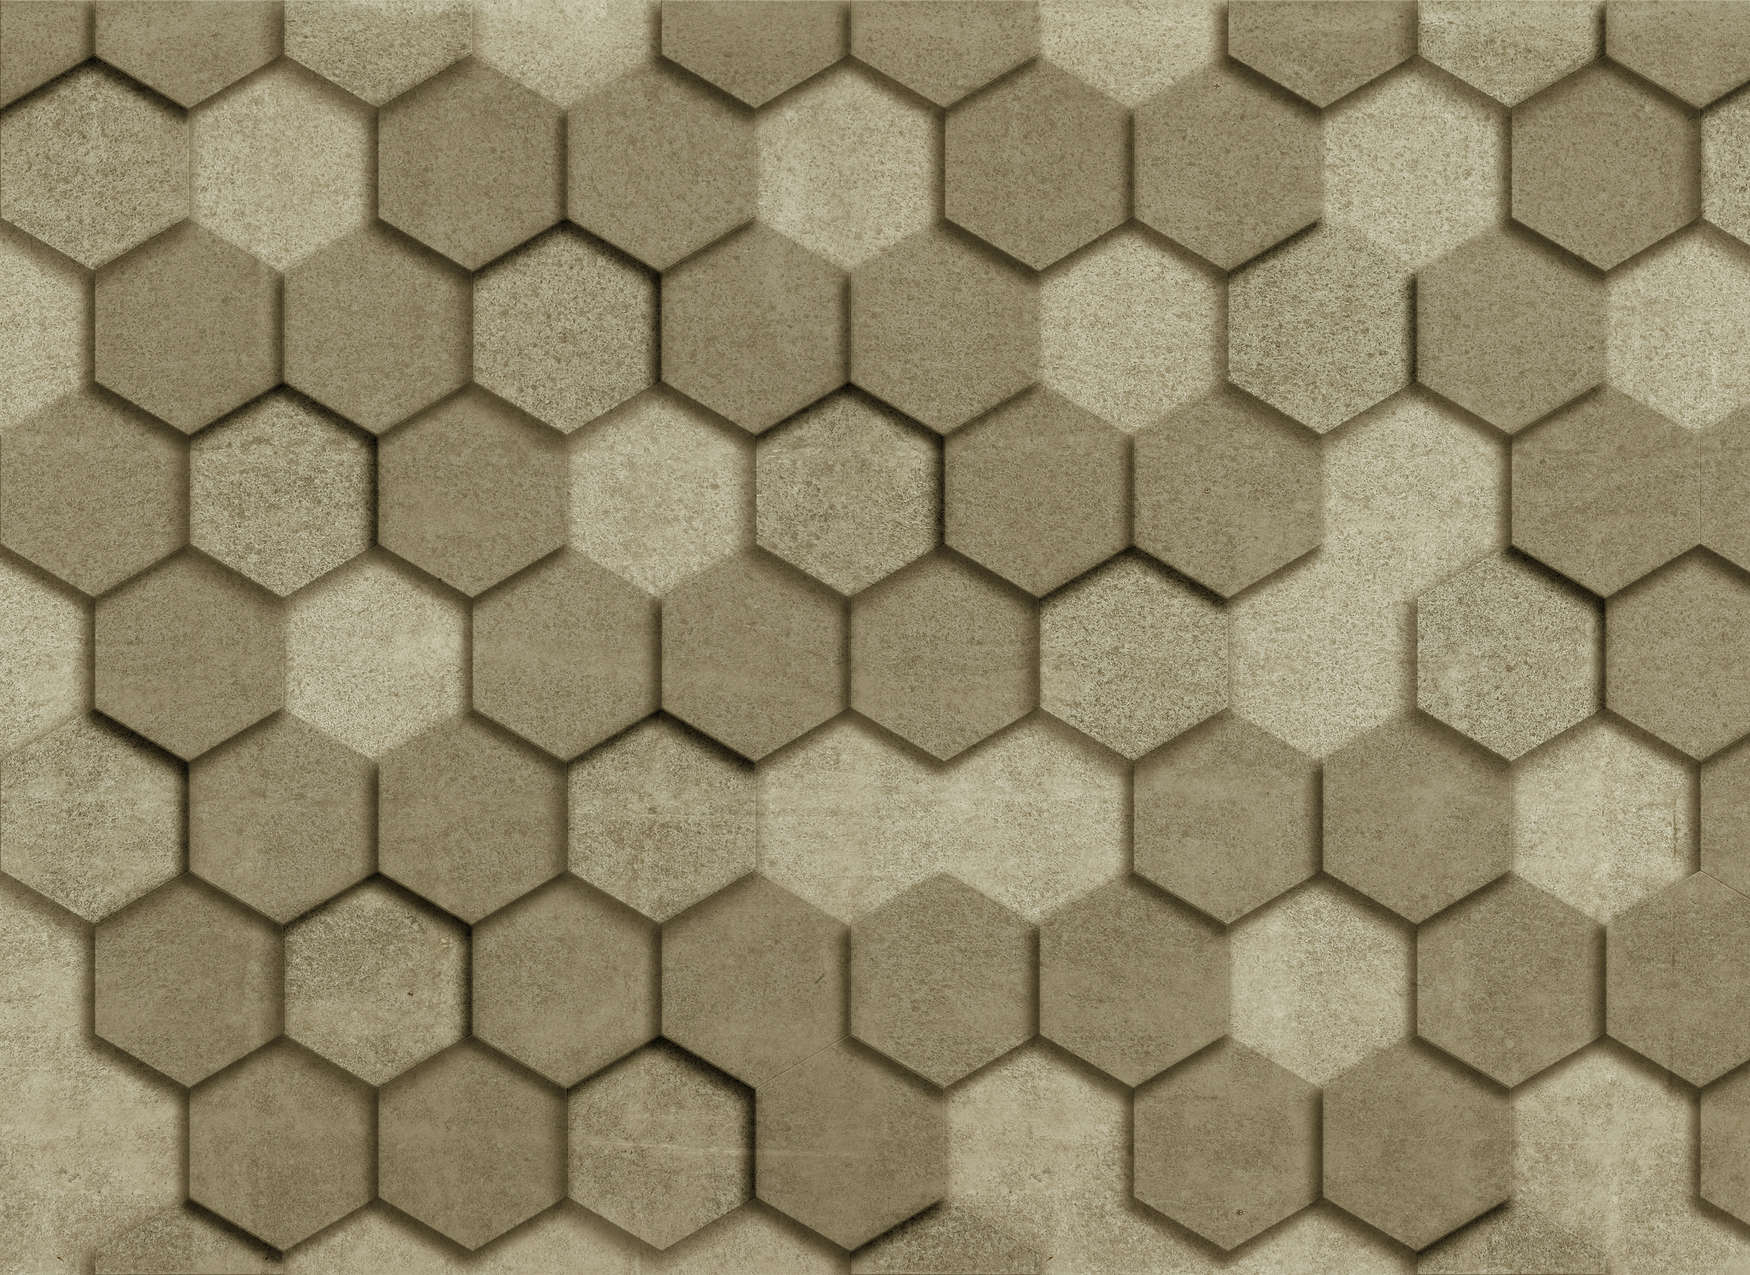             Photo wallpaper with geometric tiles hexagonal 3D look - gold
        